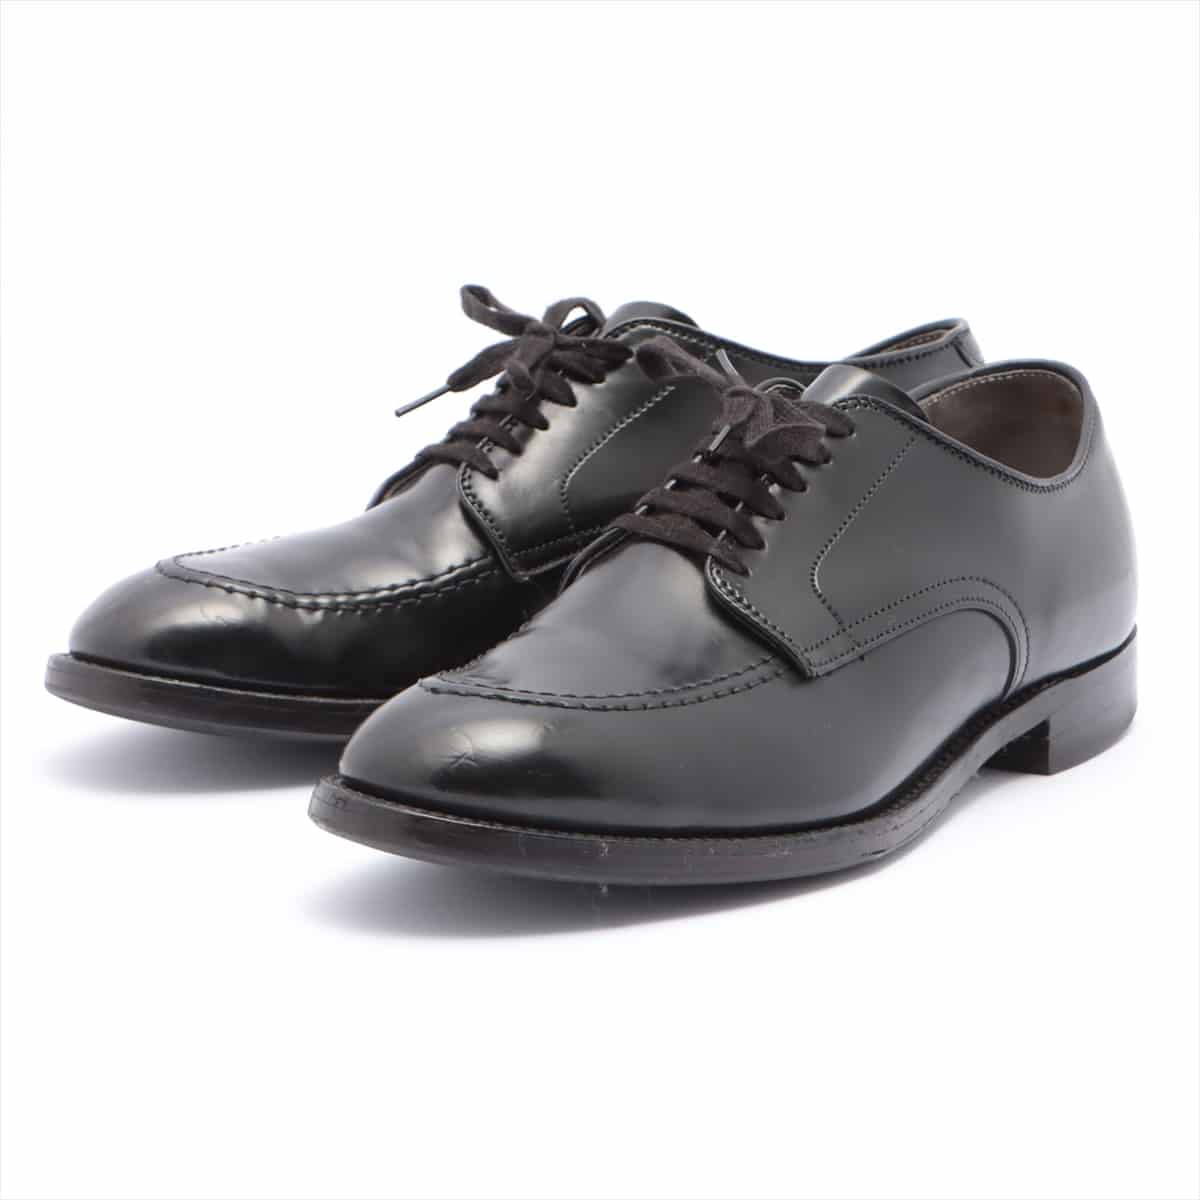 Alden Leather Leather shoes 8 Men's Black Resoled